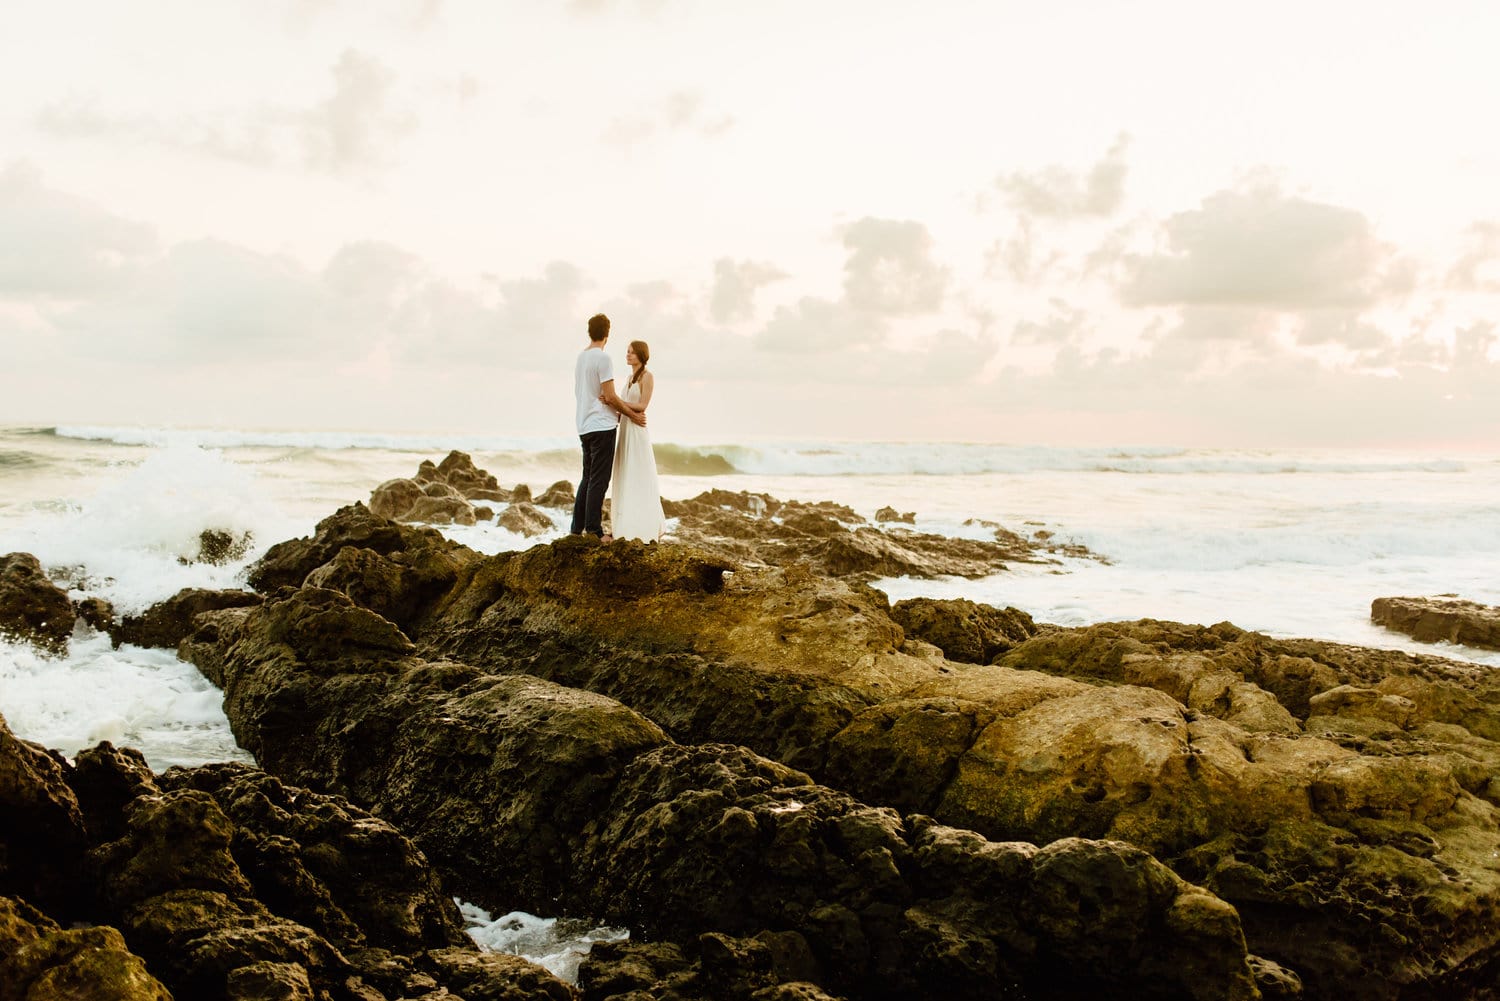 Bride and groom standing on rocks along the shore in Santa Teresa, Costa Rica.